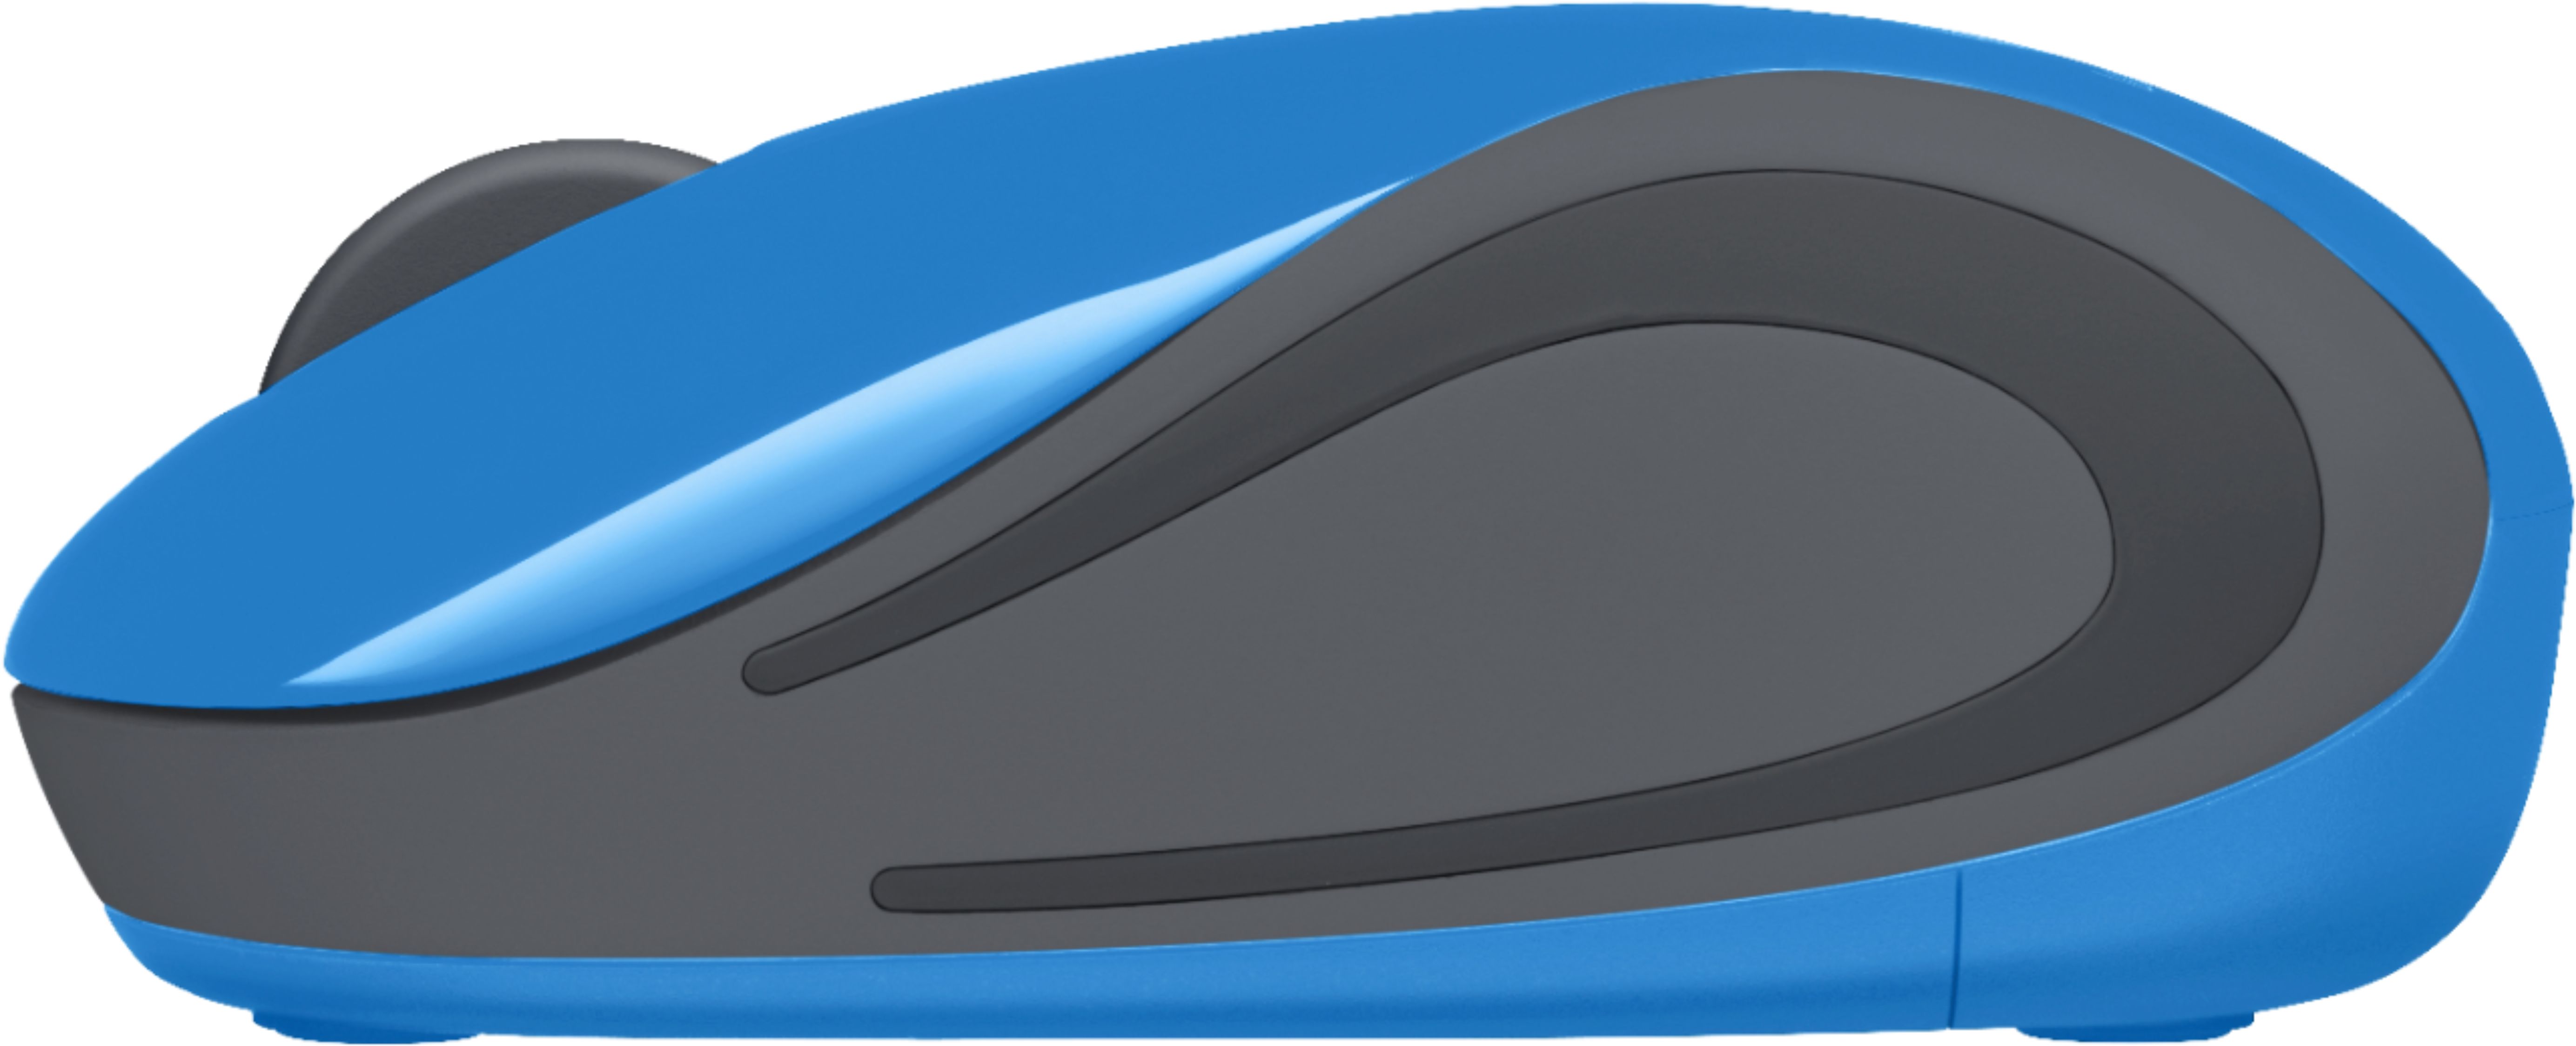 Buy: Best M187 Mouse Mini 910-002728 Wireless Optical Ambidextrous Blue-gray Logitech